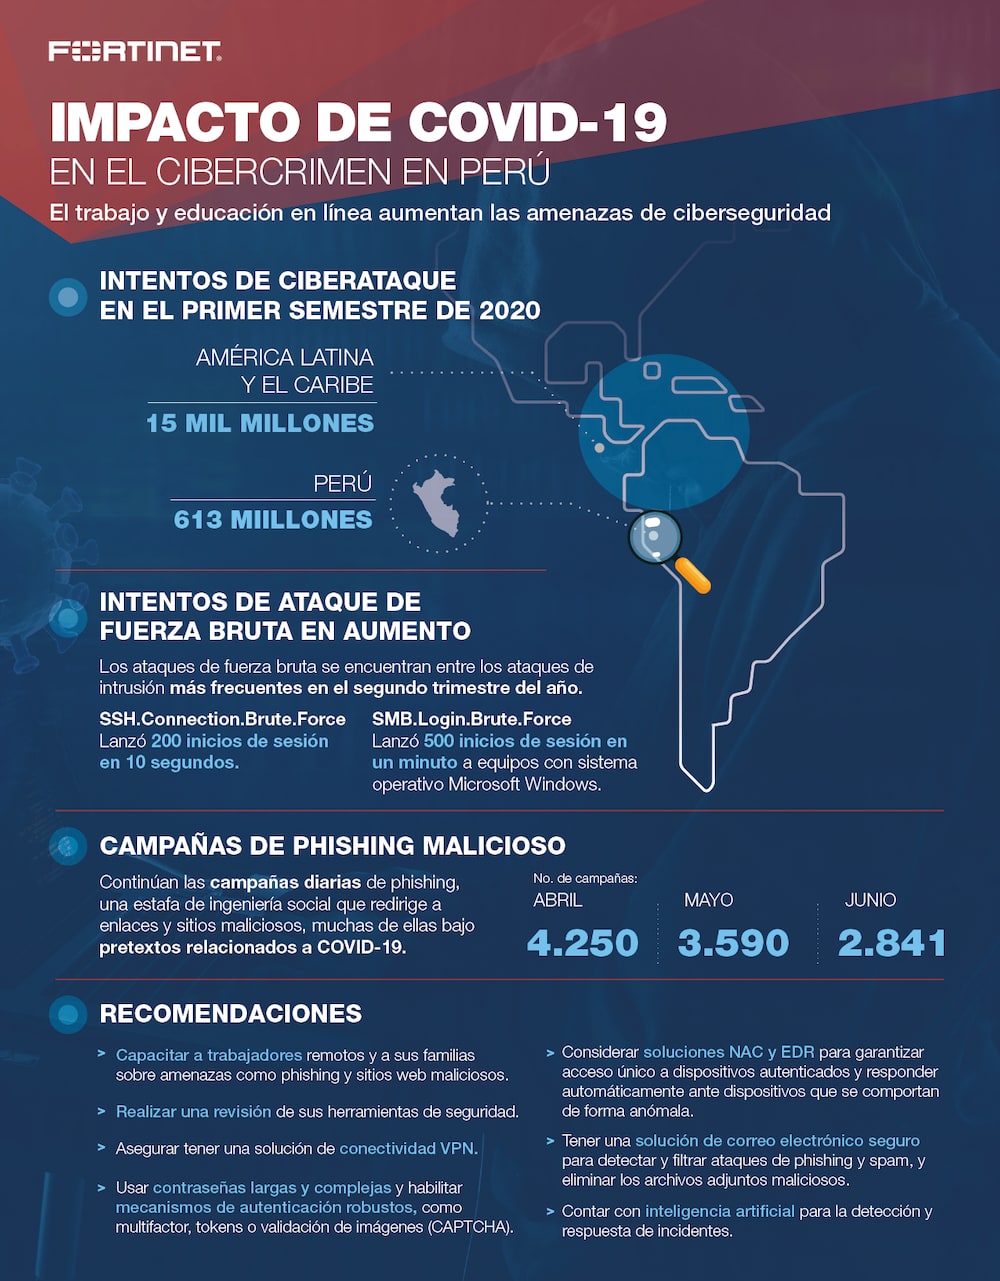 Perú recibió más de 600 millones de intentos de ciberataques en 2020